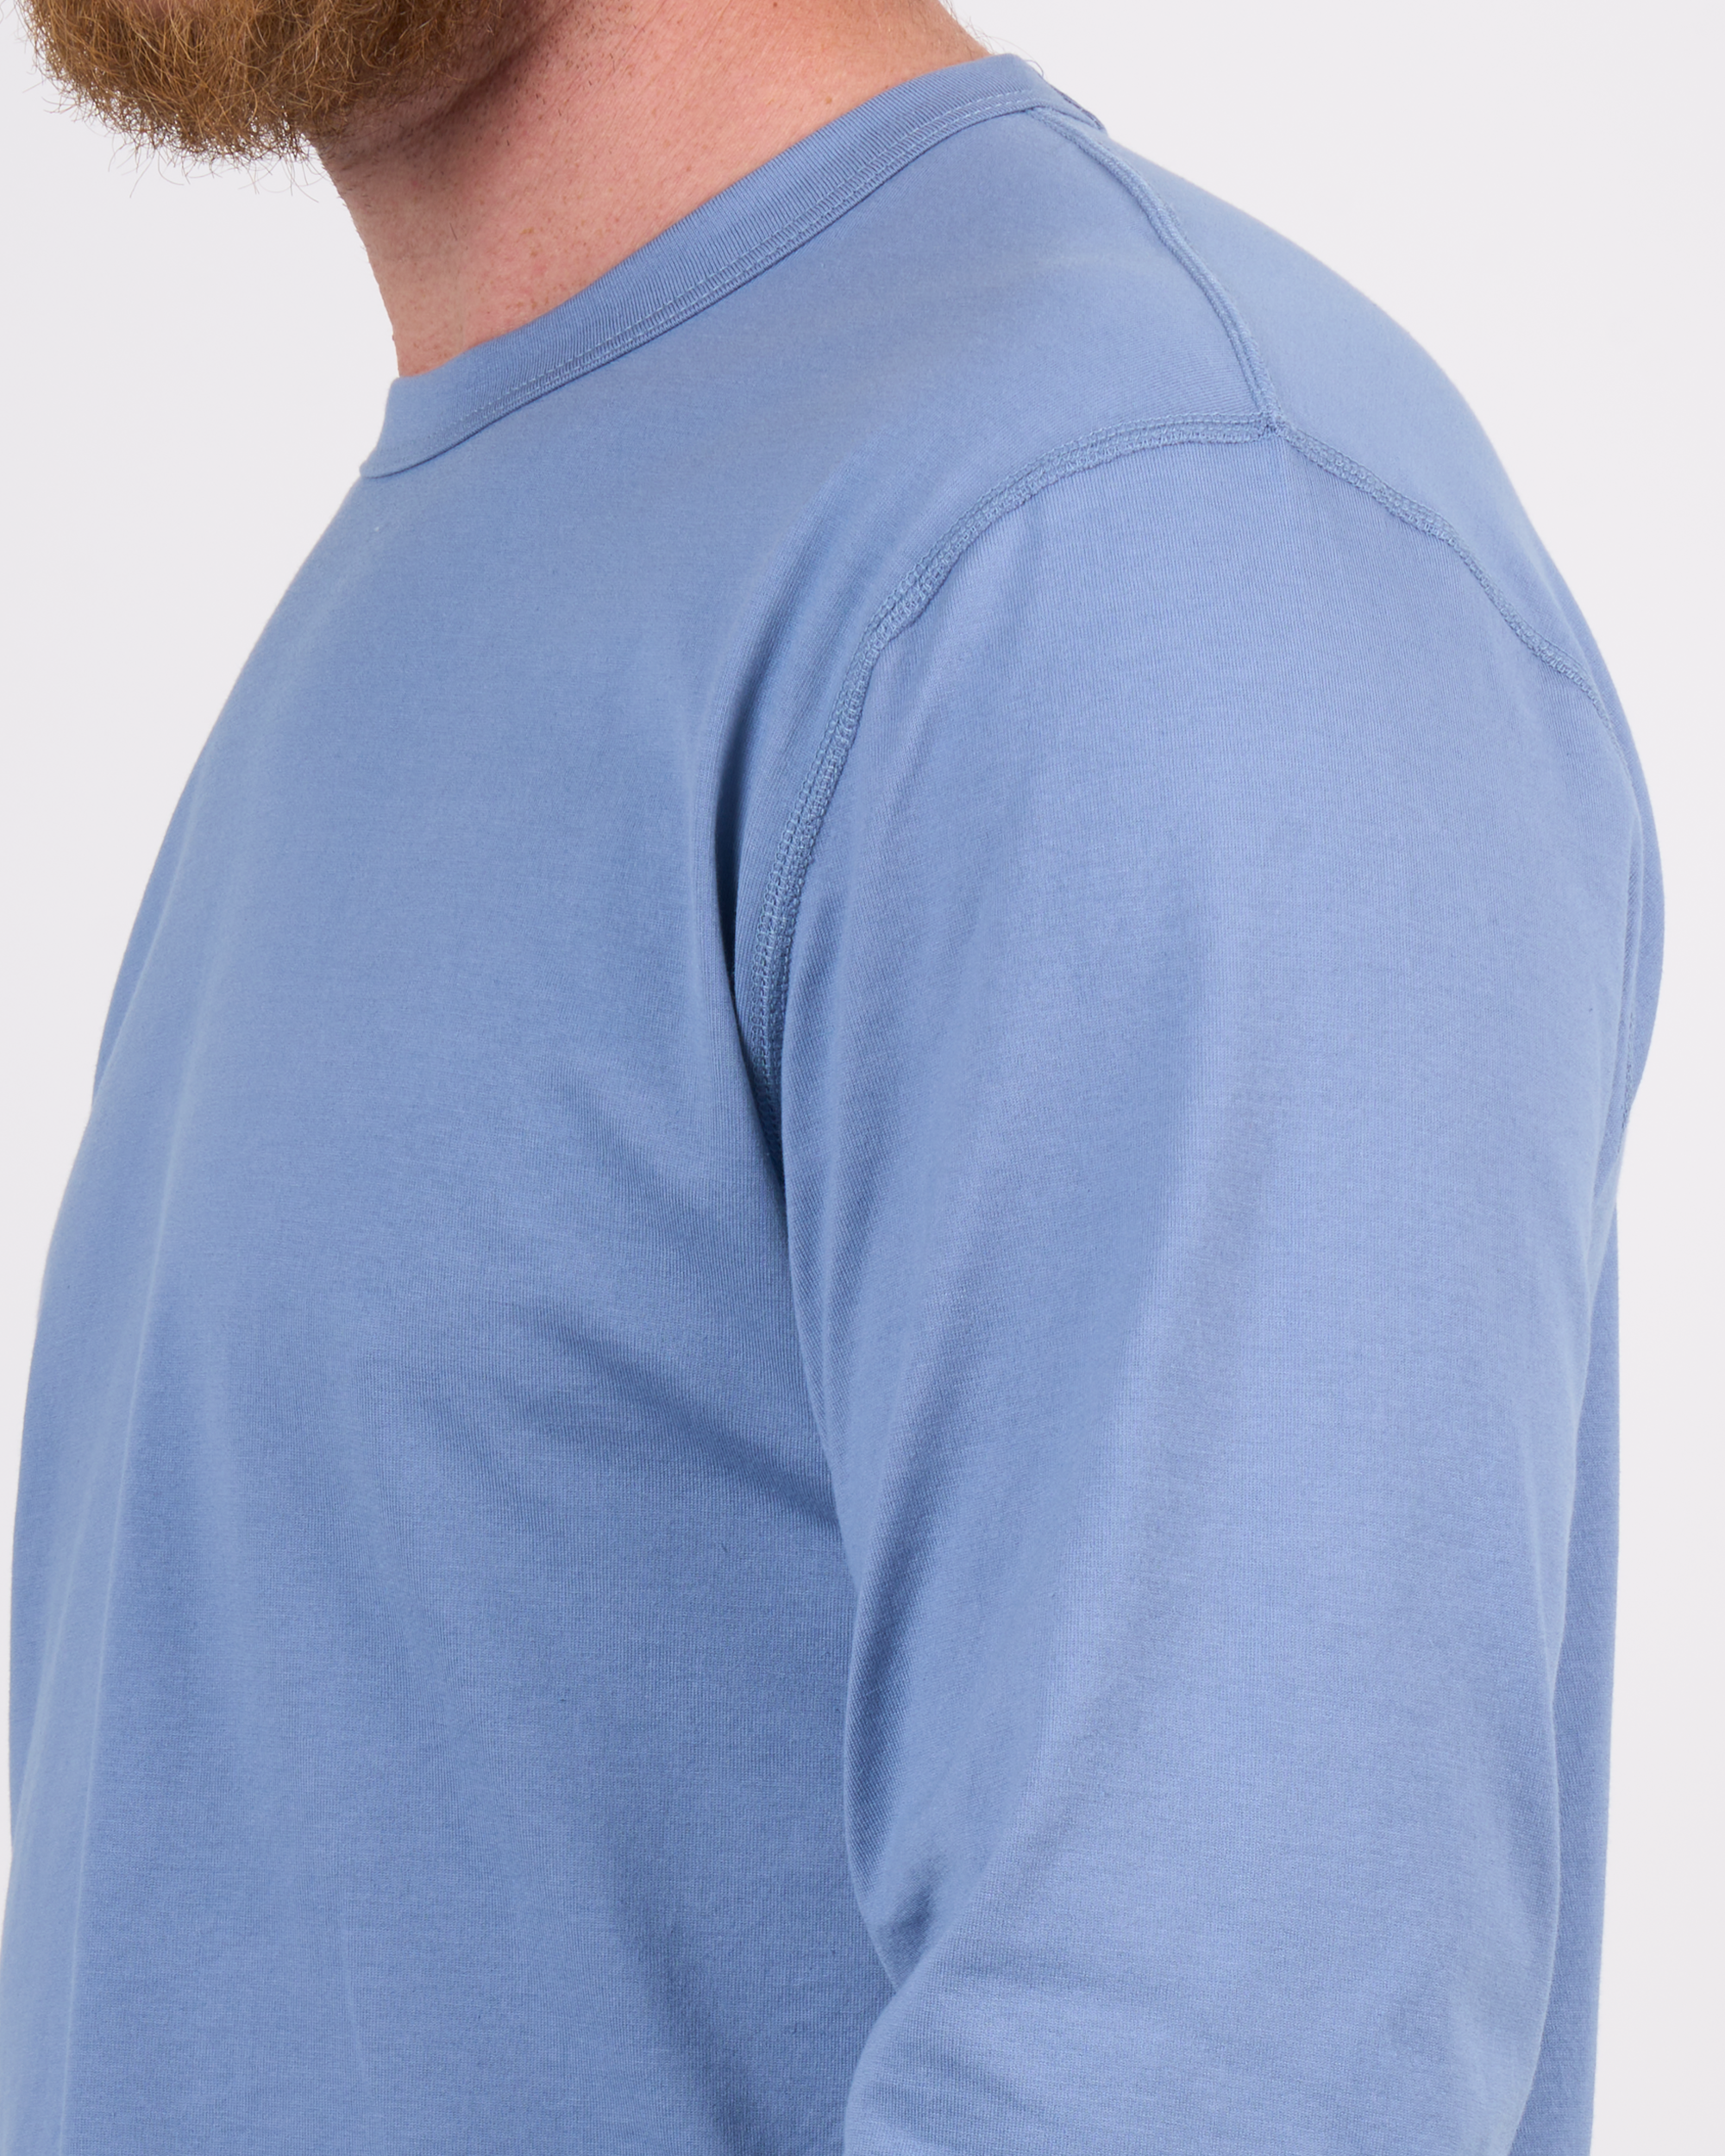 Foreign Rider Co Supima Cotton Metallic Blue Long Sleeve T-Shirt Shoulder Flat-lock Stitch Detail